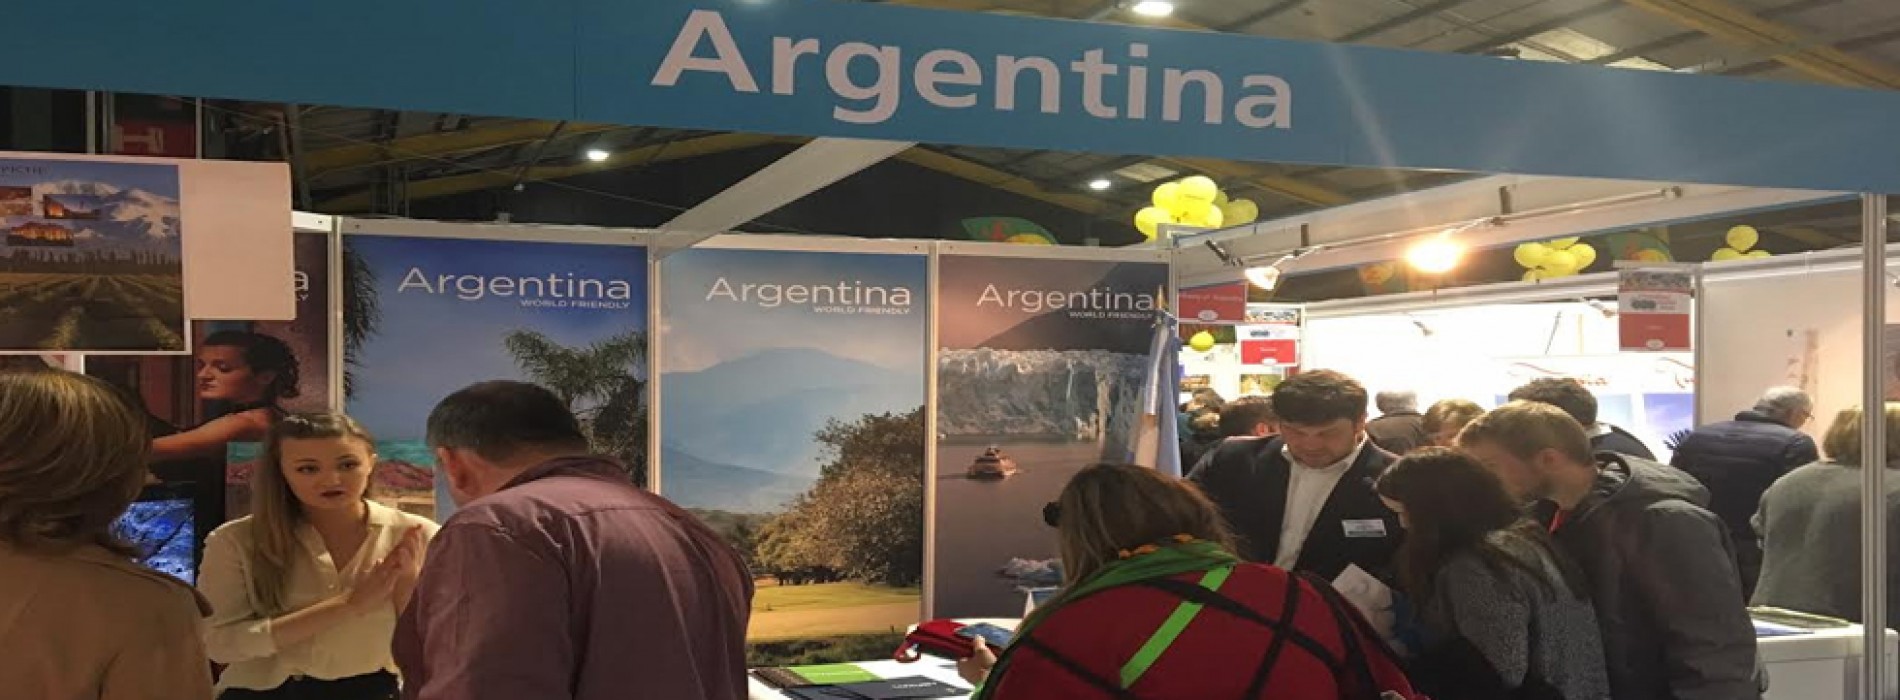 Outstanding presence of Argentina in Ireland